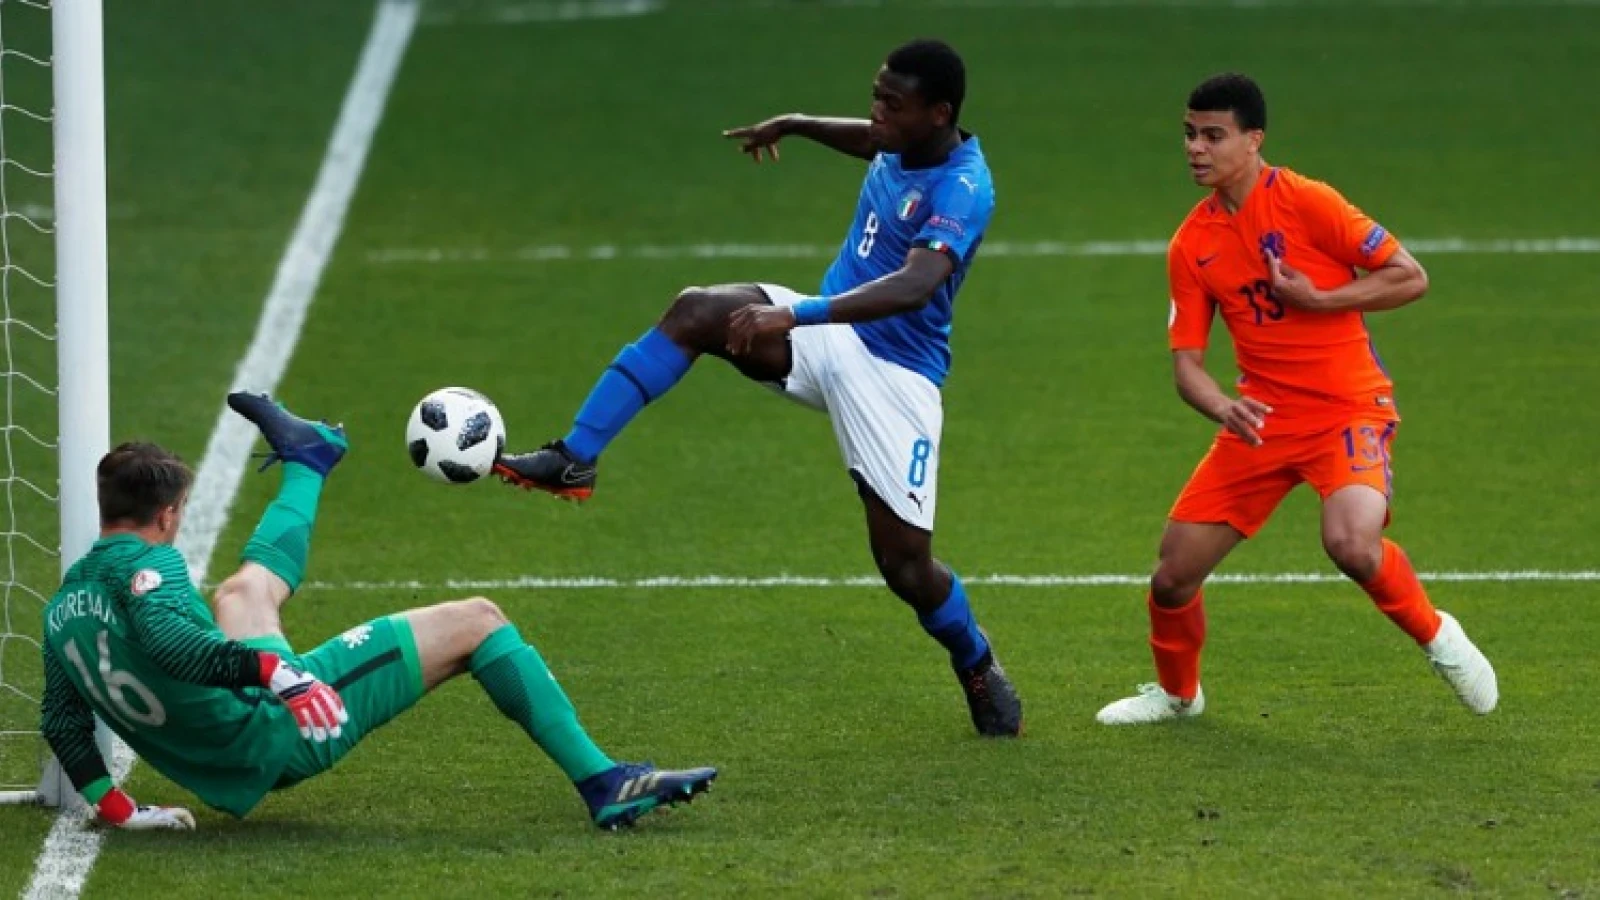 Feyenoorddoelman bezorgt Oranje onder 17 Europese titel